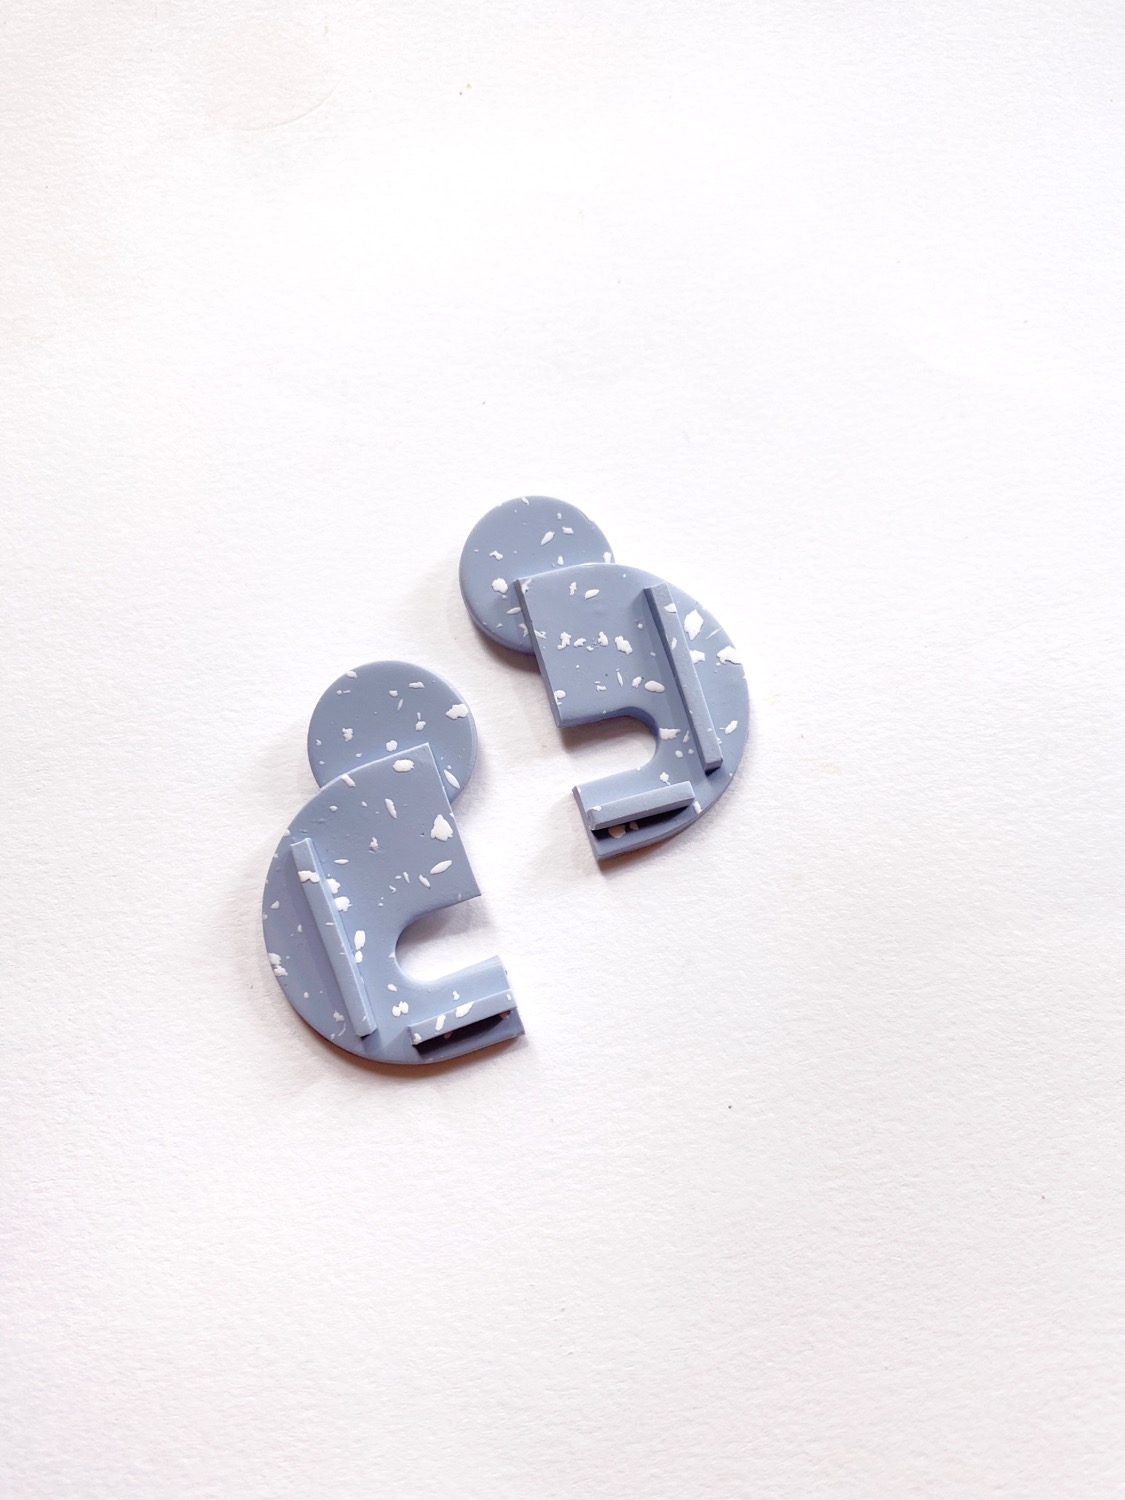 Limited Pre-order: Bauhaus Series - Berlin Powder Blue Speckle Polymer Clay Earrings